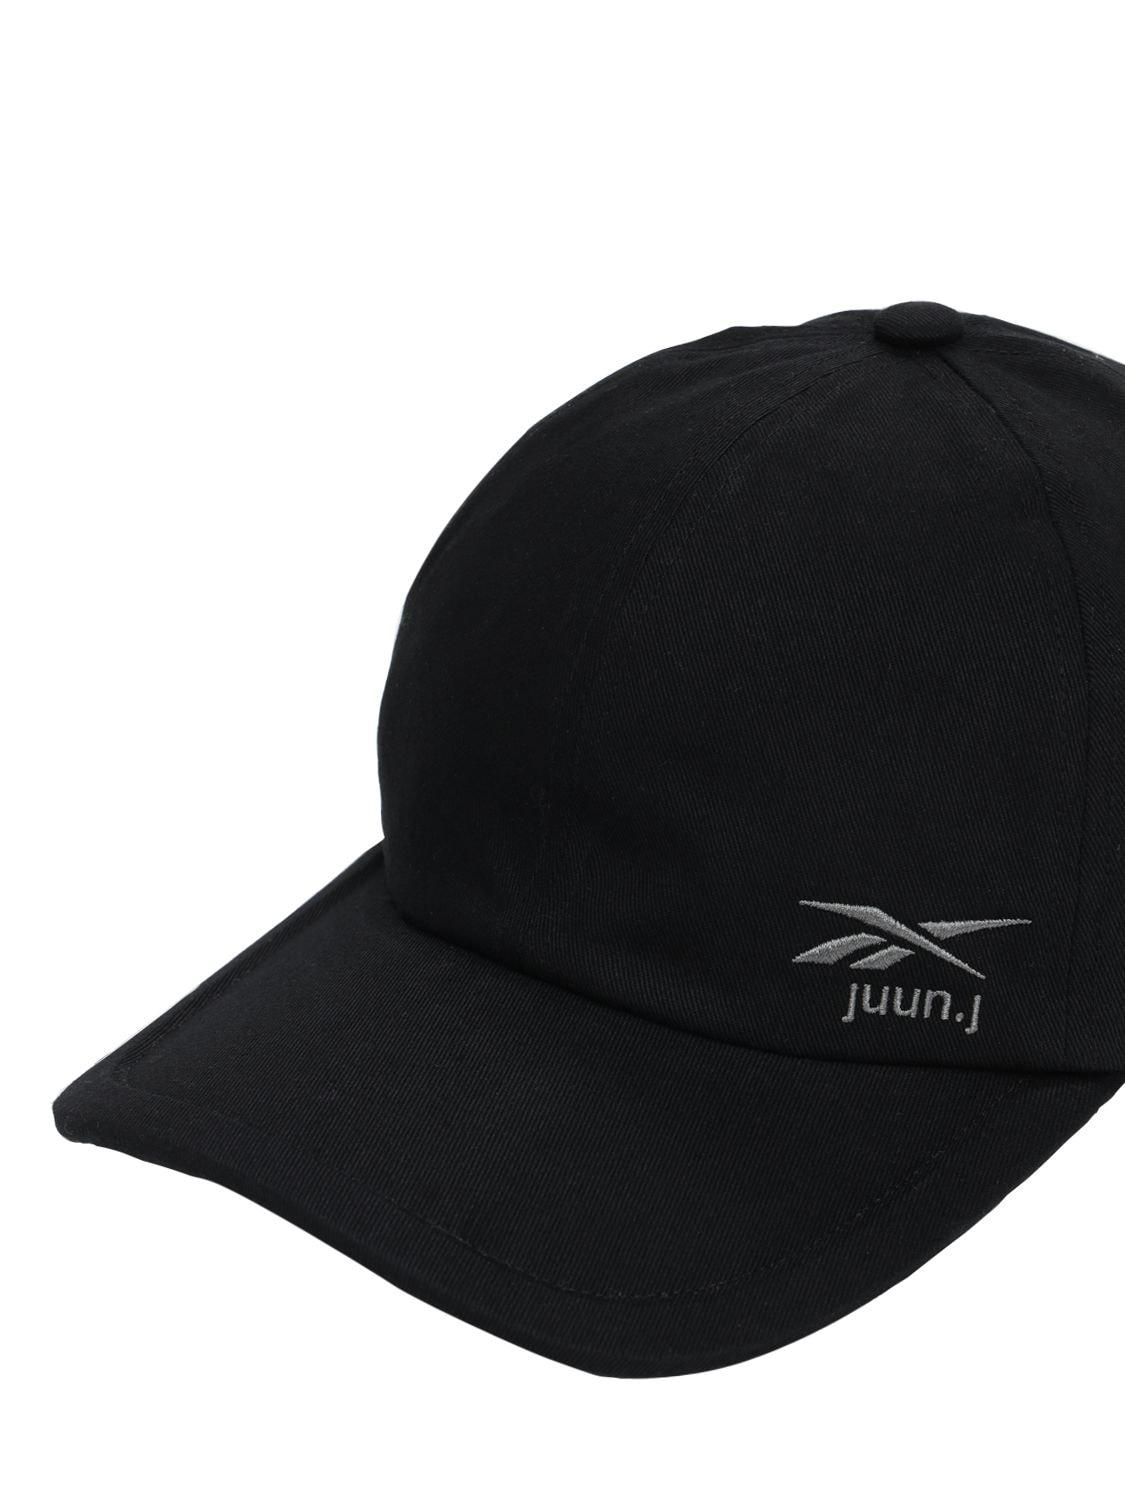 Reebok Juun.j Baseball Hat in Black for Men | Lyst